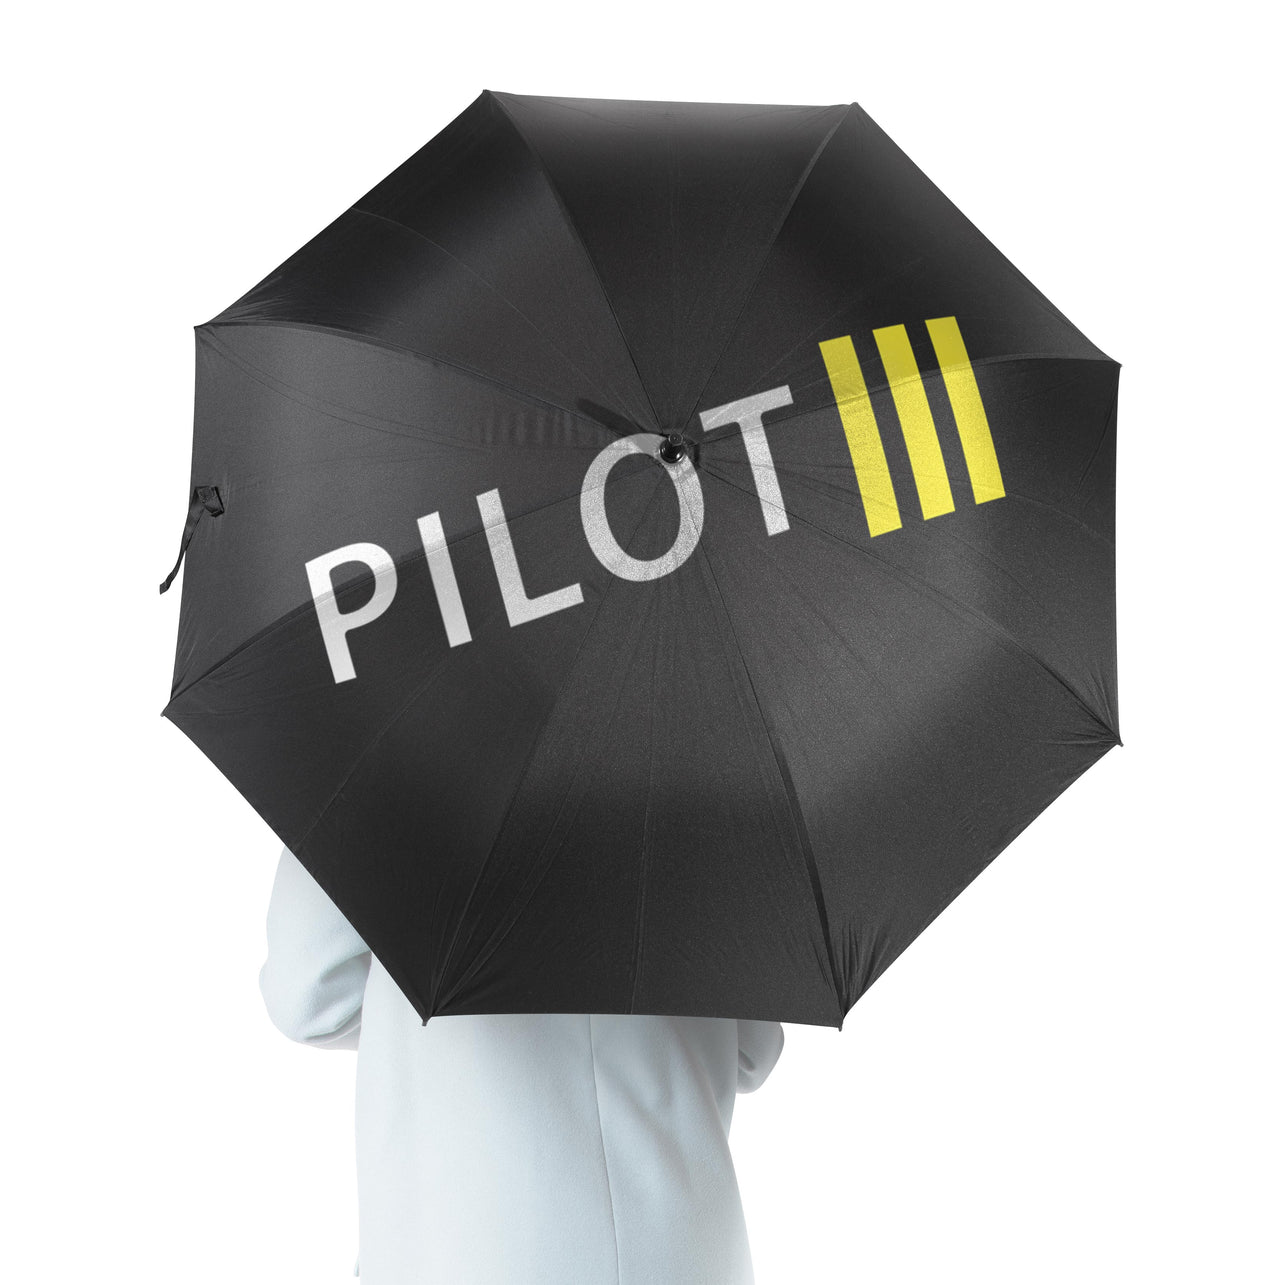 Pilot & Stripes (3 Lines) Designed Umbrella